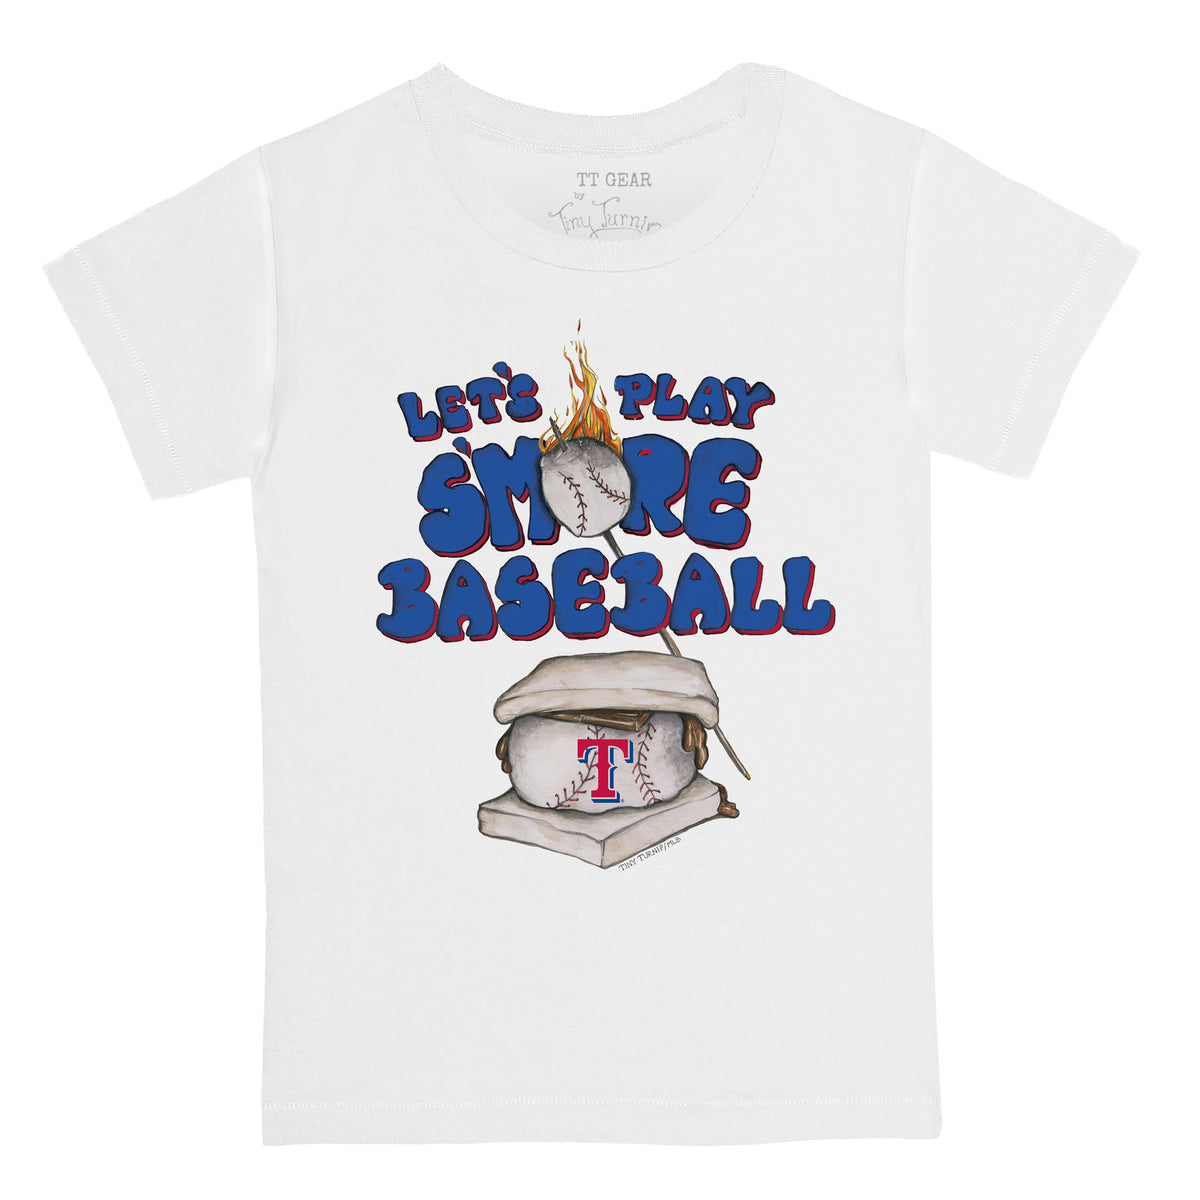 Youth Tiny Turnip White Texas Rangers Baseball Babes T-Shirt Size: Small